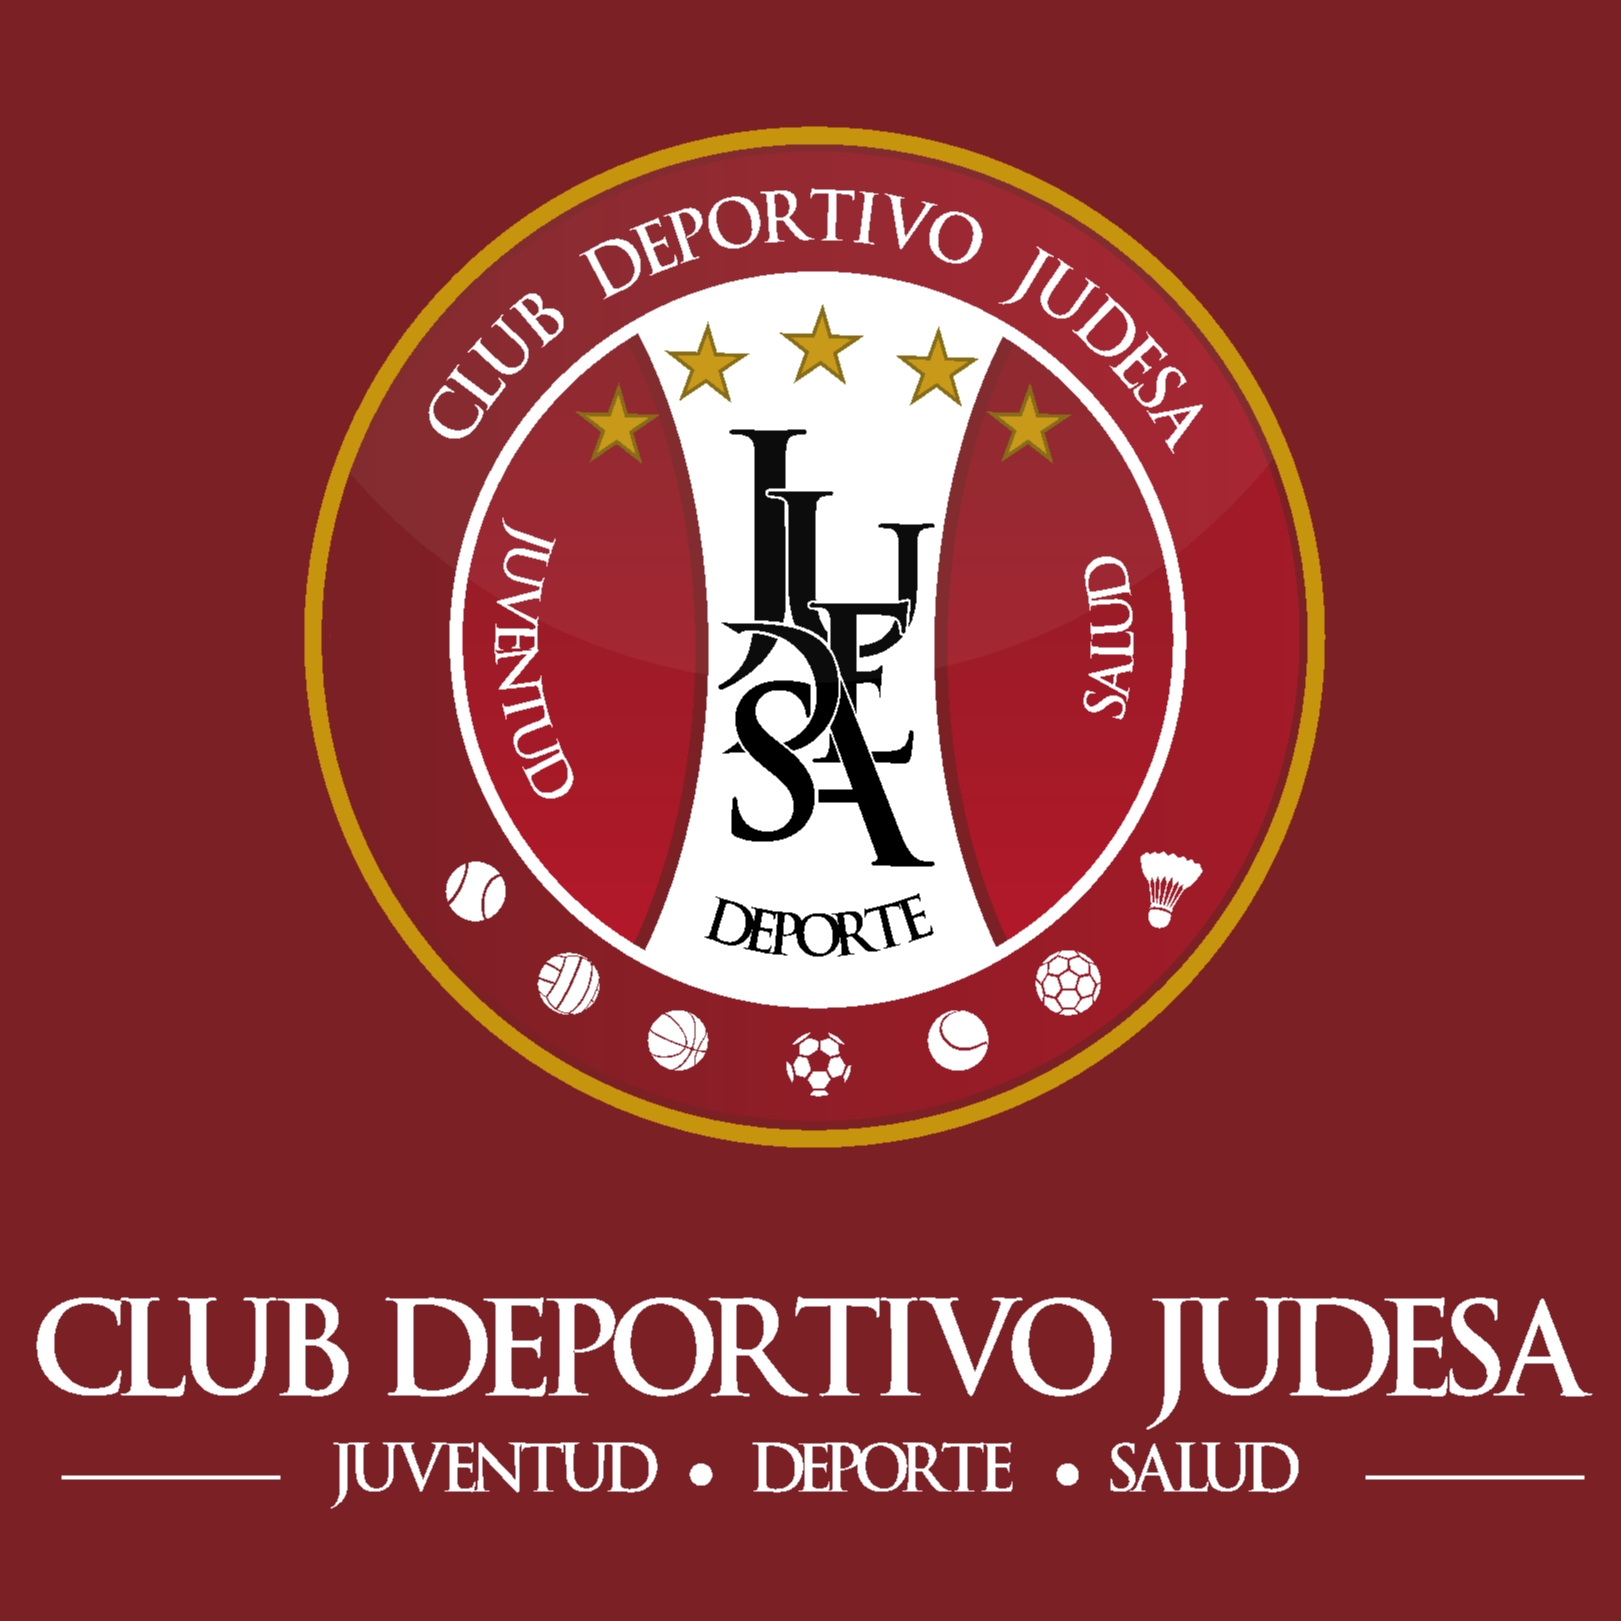 CLUB DEPORTIVO JUDESA